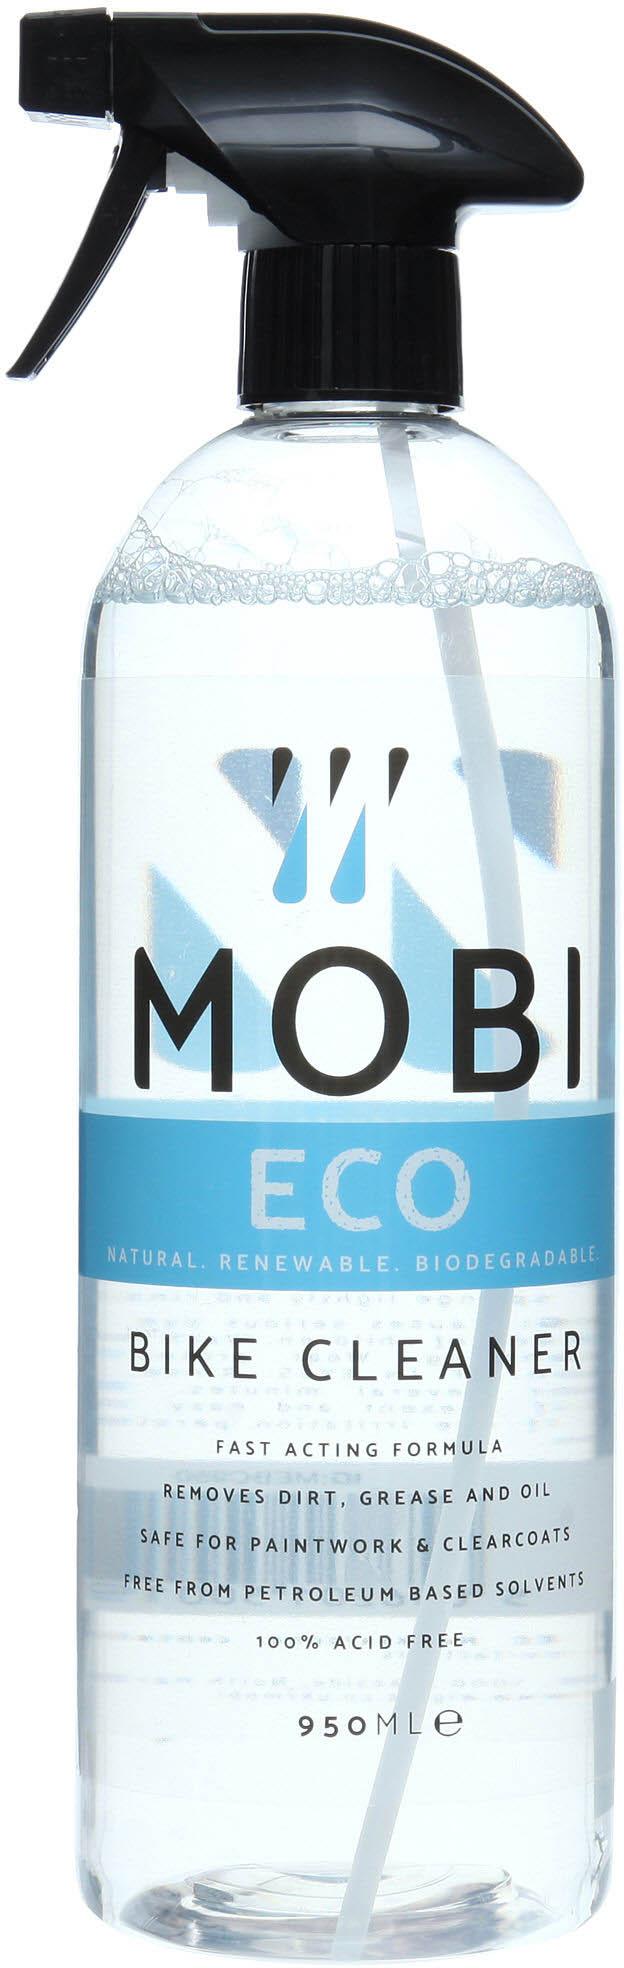 Mobi Eco Bike Cleaner 950ml - Transparent